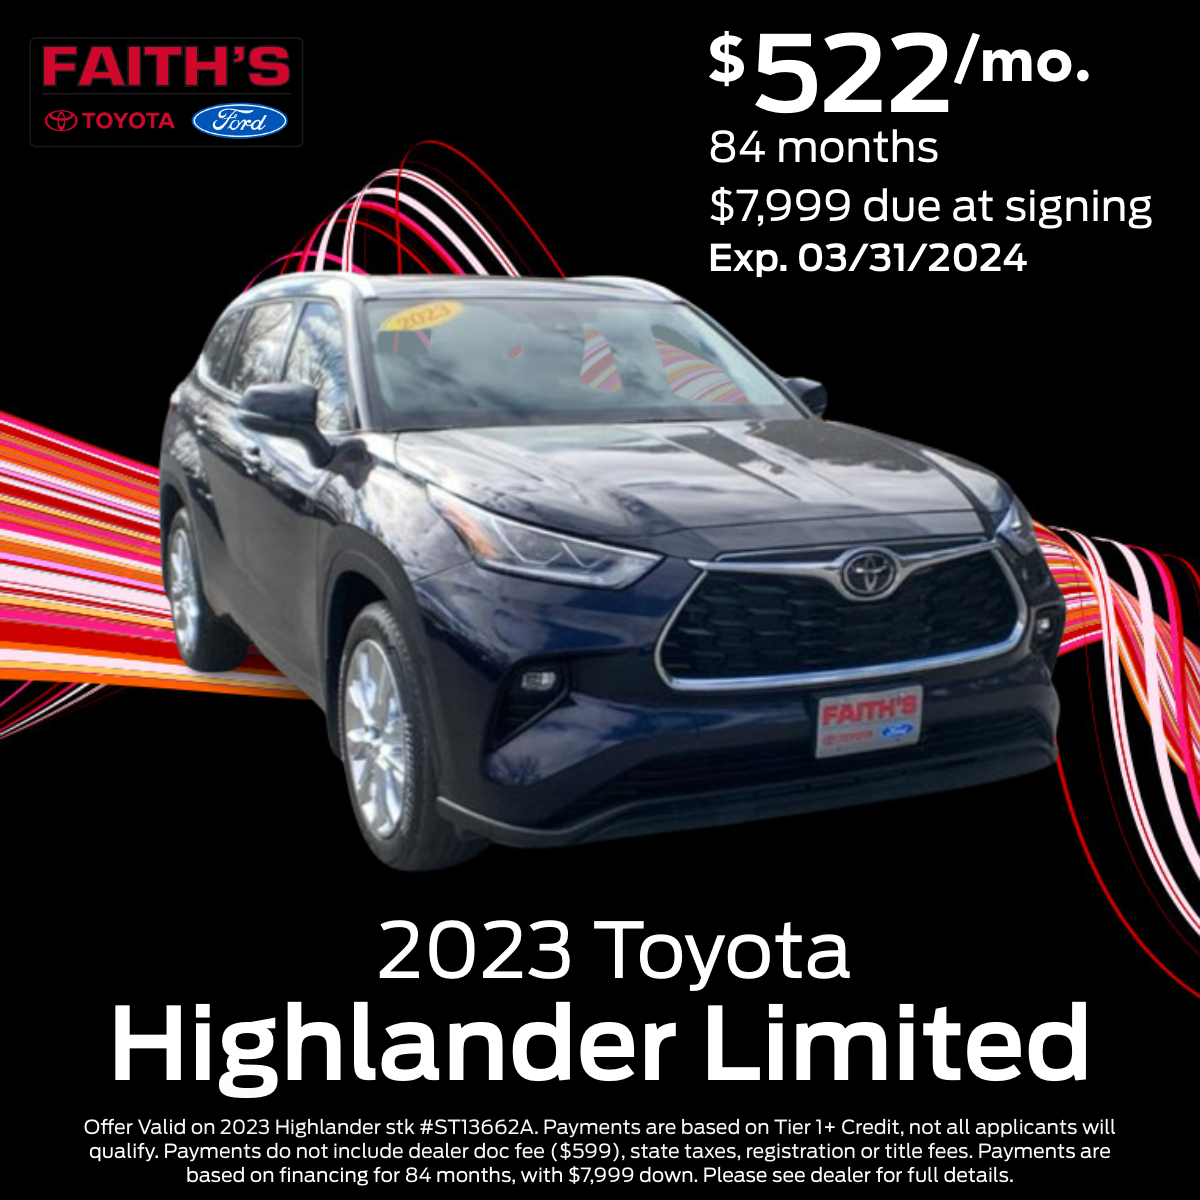 2023 Toyota Highlander Purchase Offer | Faiths Toyota